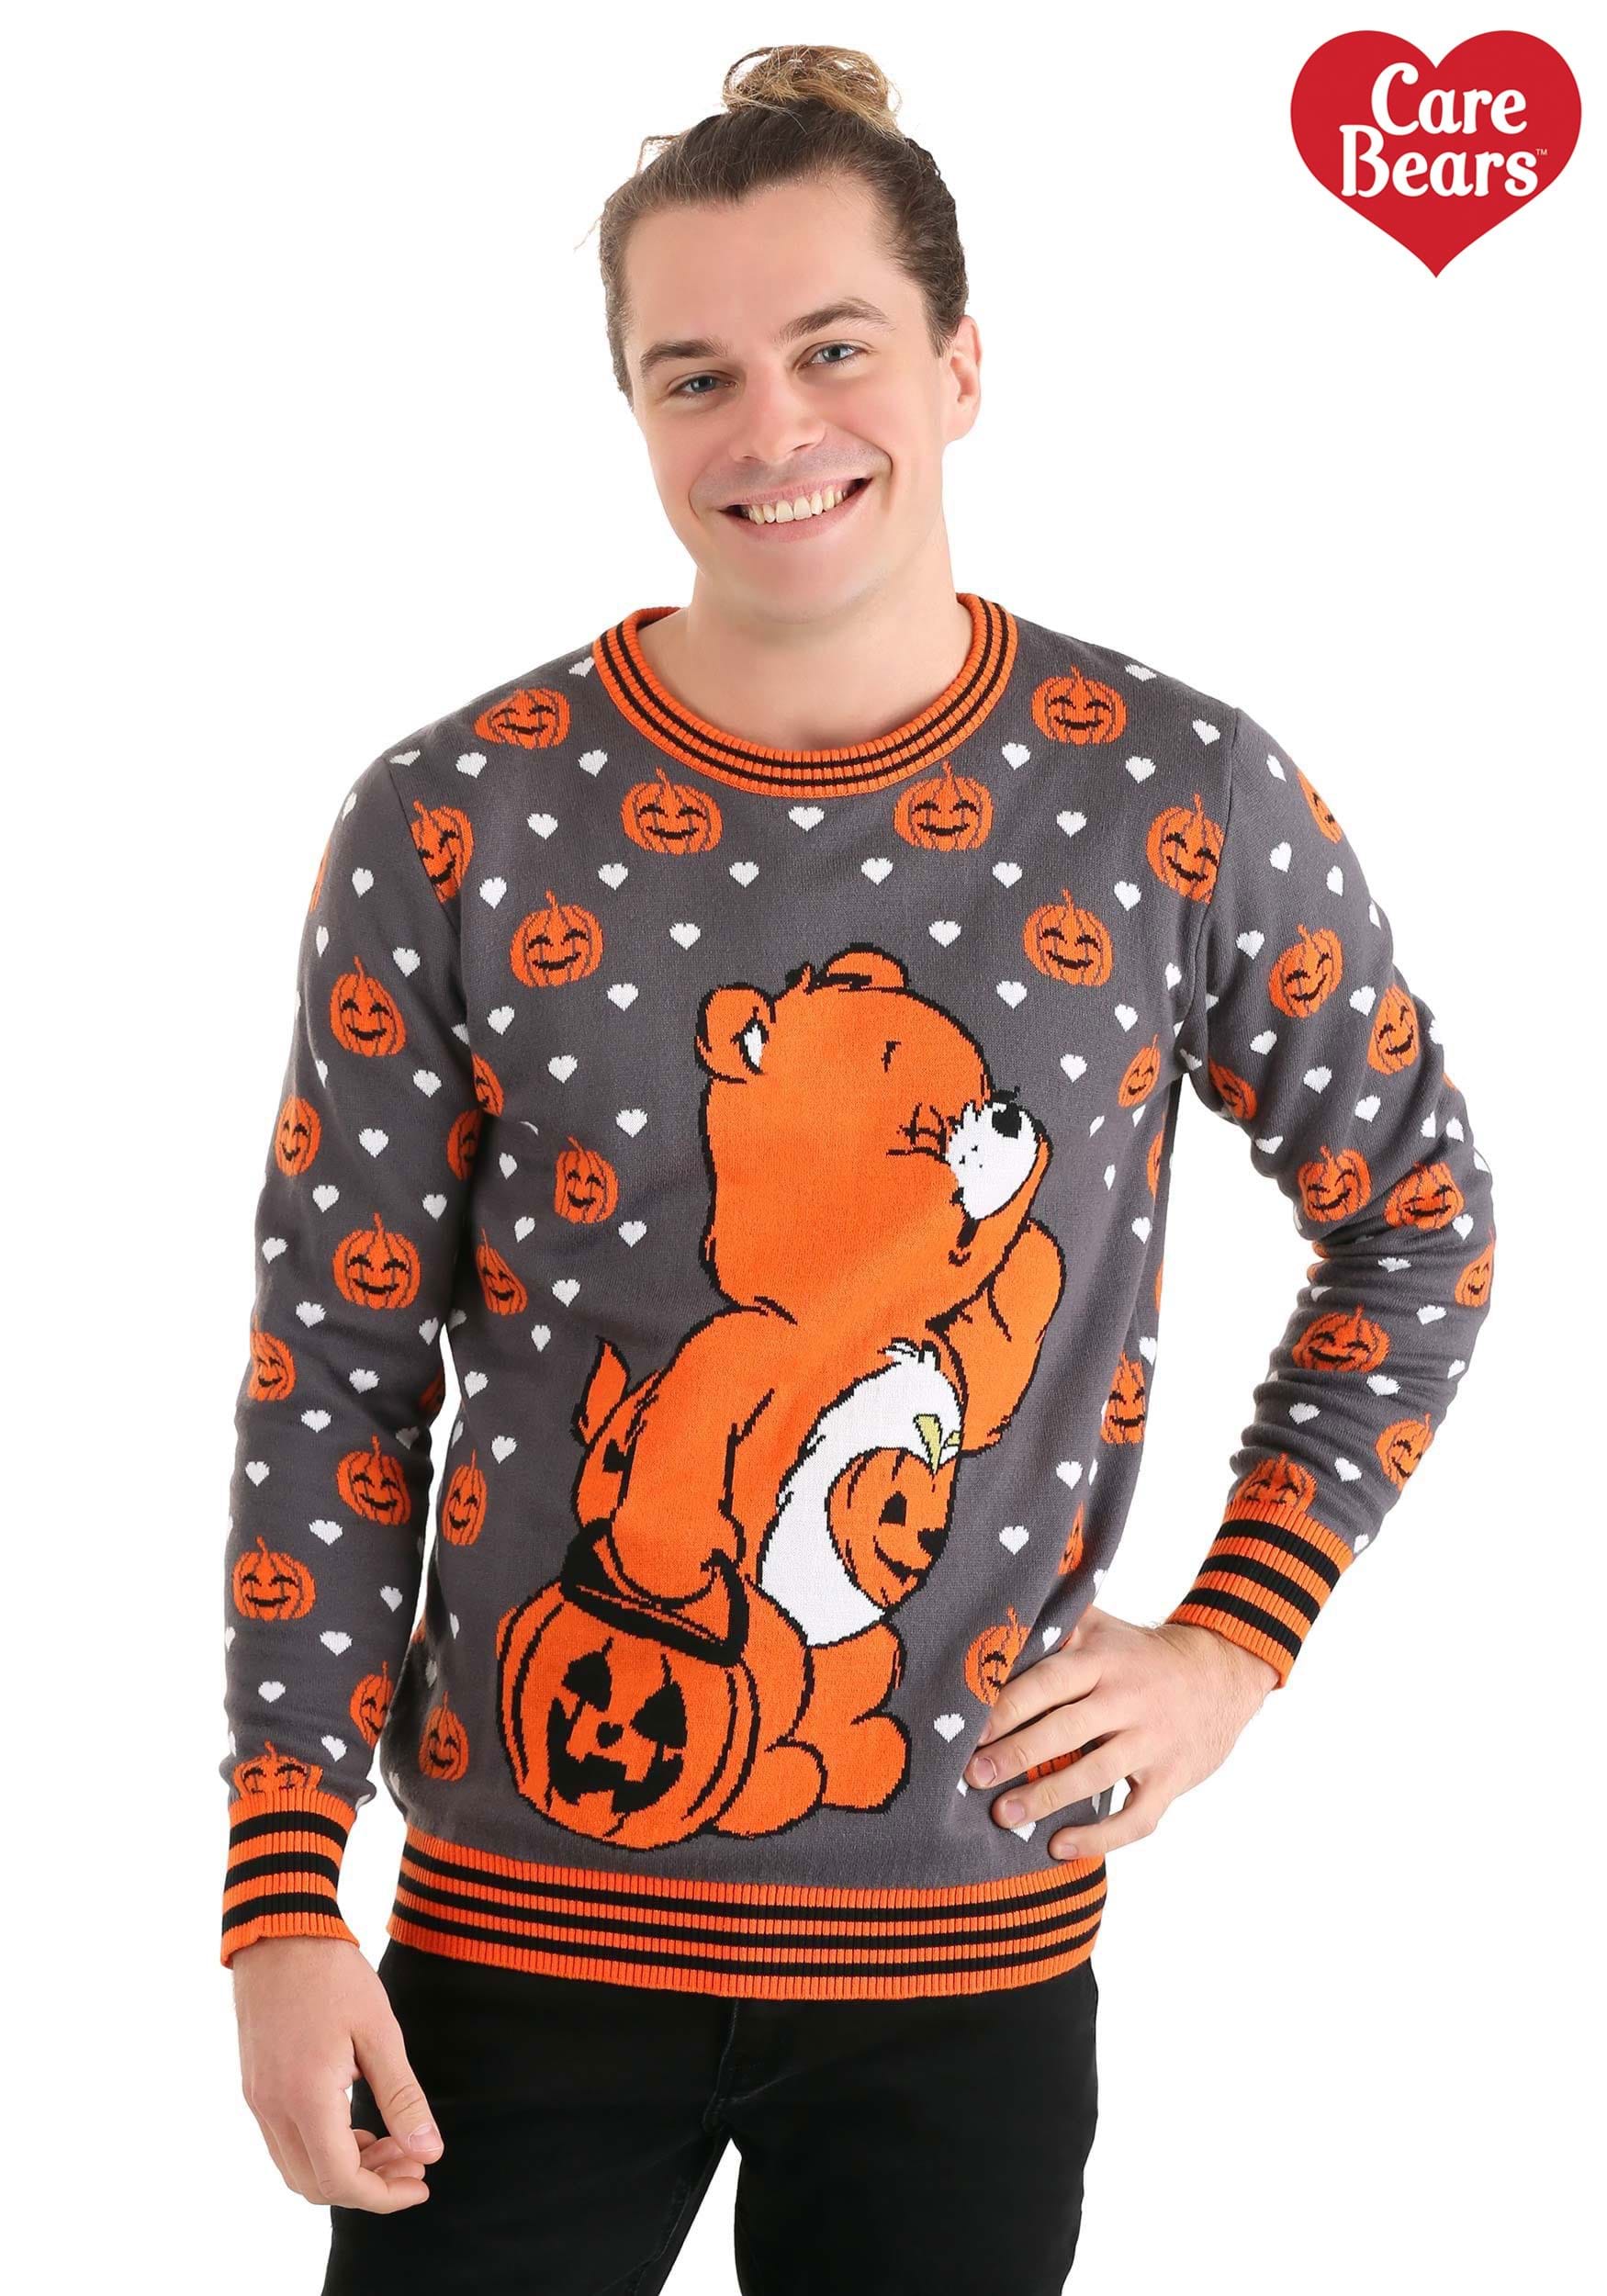 Tenderheart Bear Adult Care Bears Ugly Christmas Sweater 